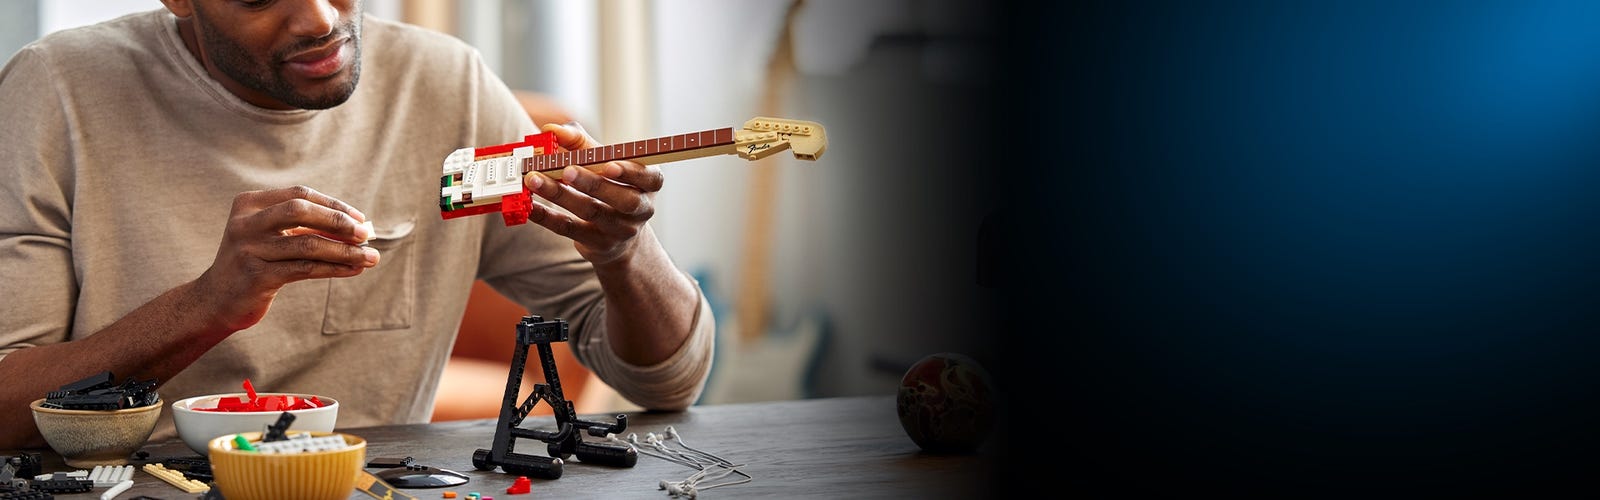 Lego Ideas Fender Stratocaster Guitar Set 21329 : Target